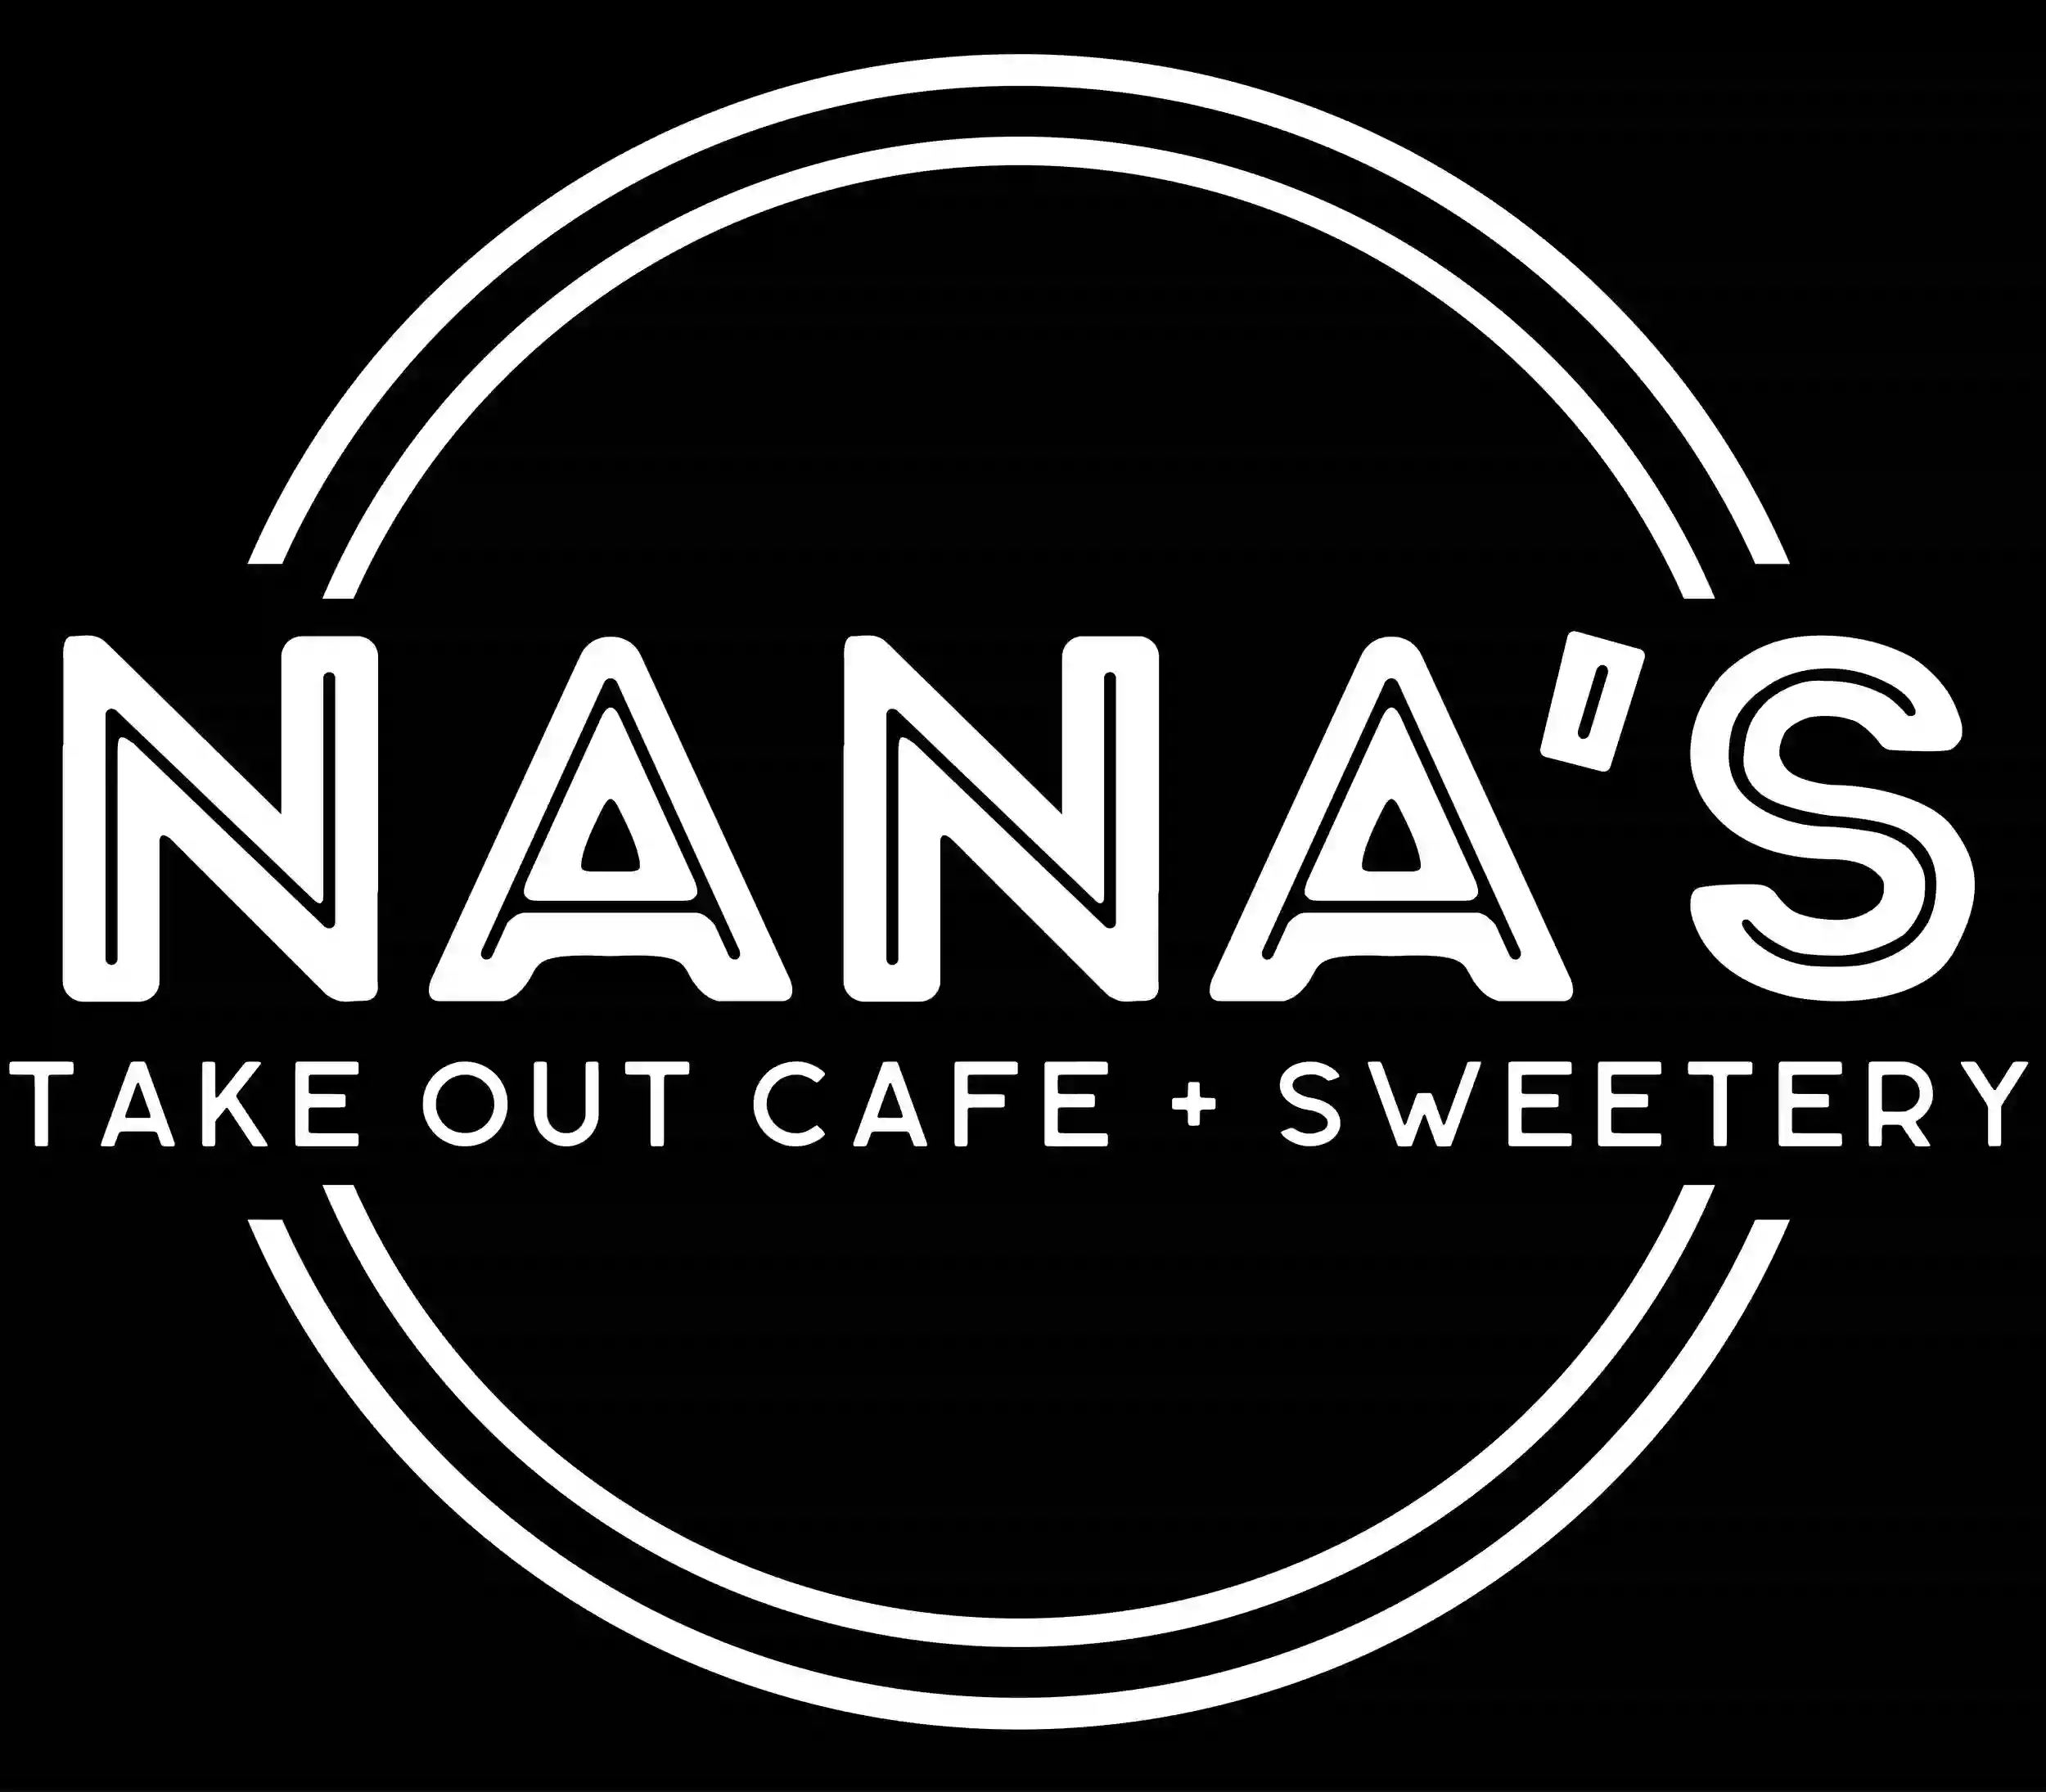 Nana’s Take Out Cafe & Sweetery